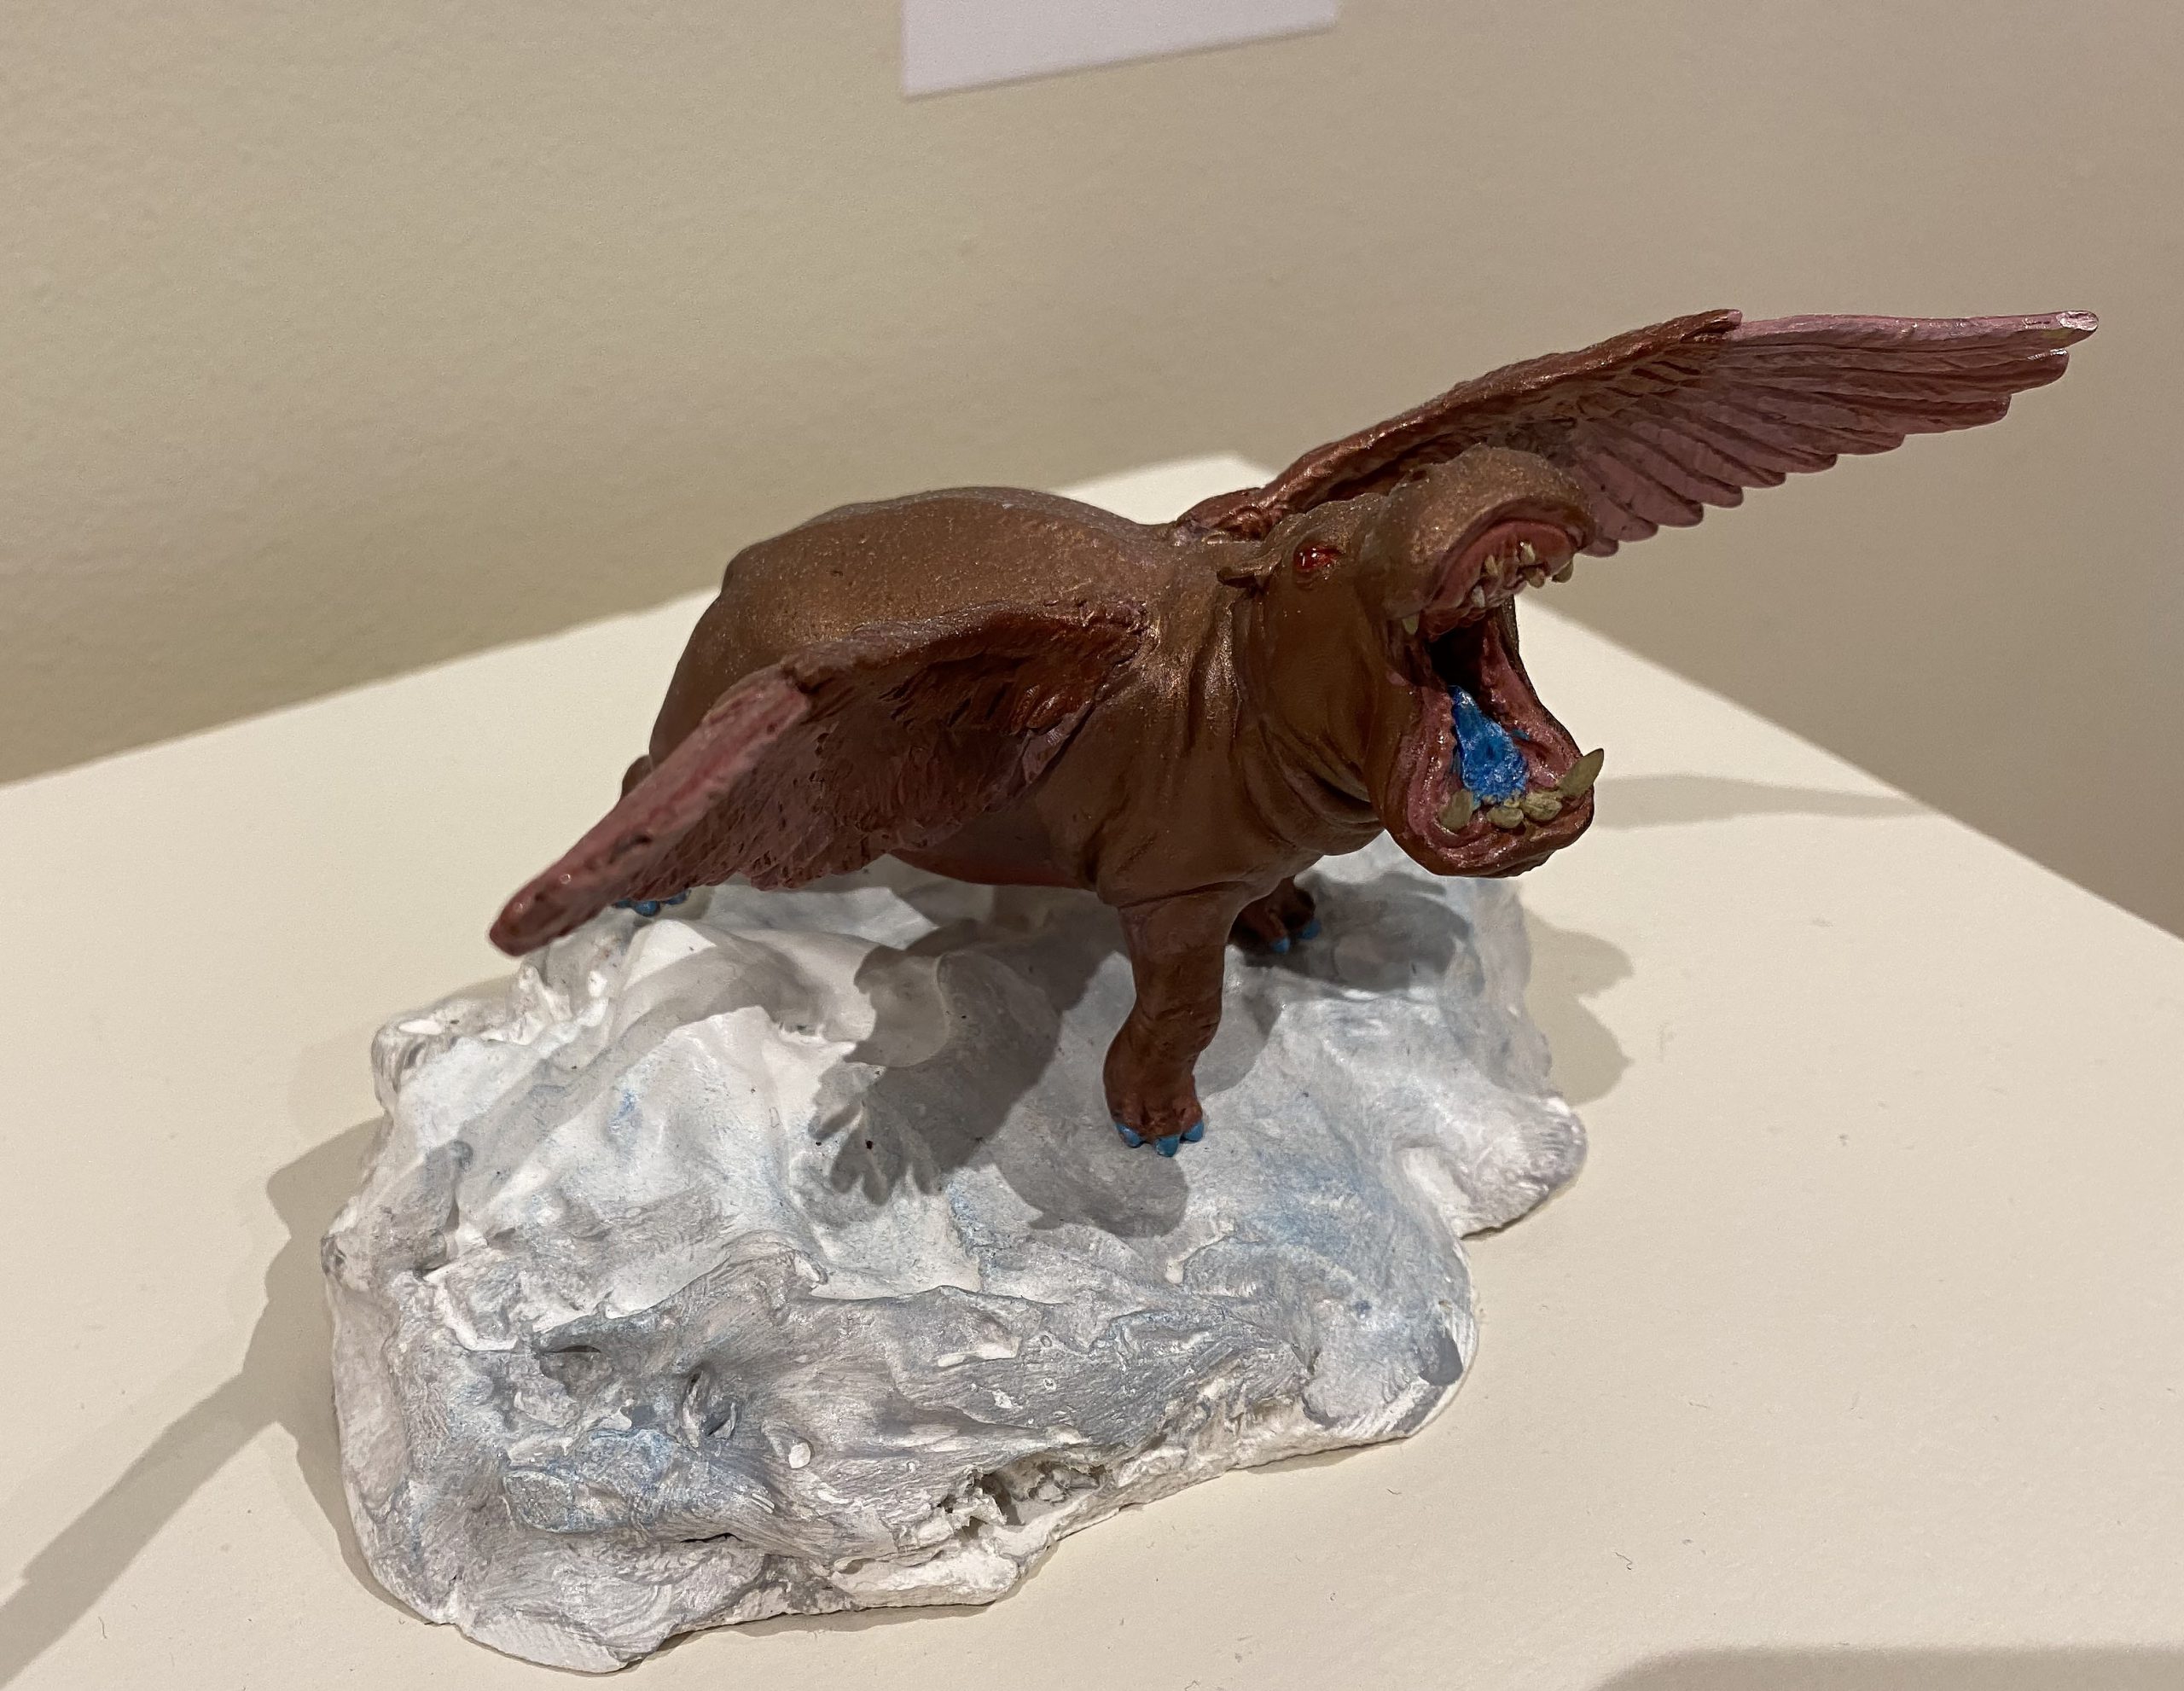 A close up shot of Vicciarelli's artwork, a winged hippo